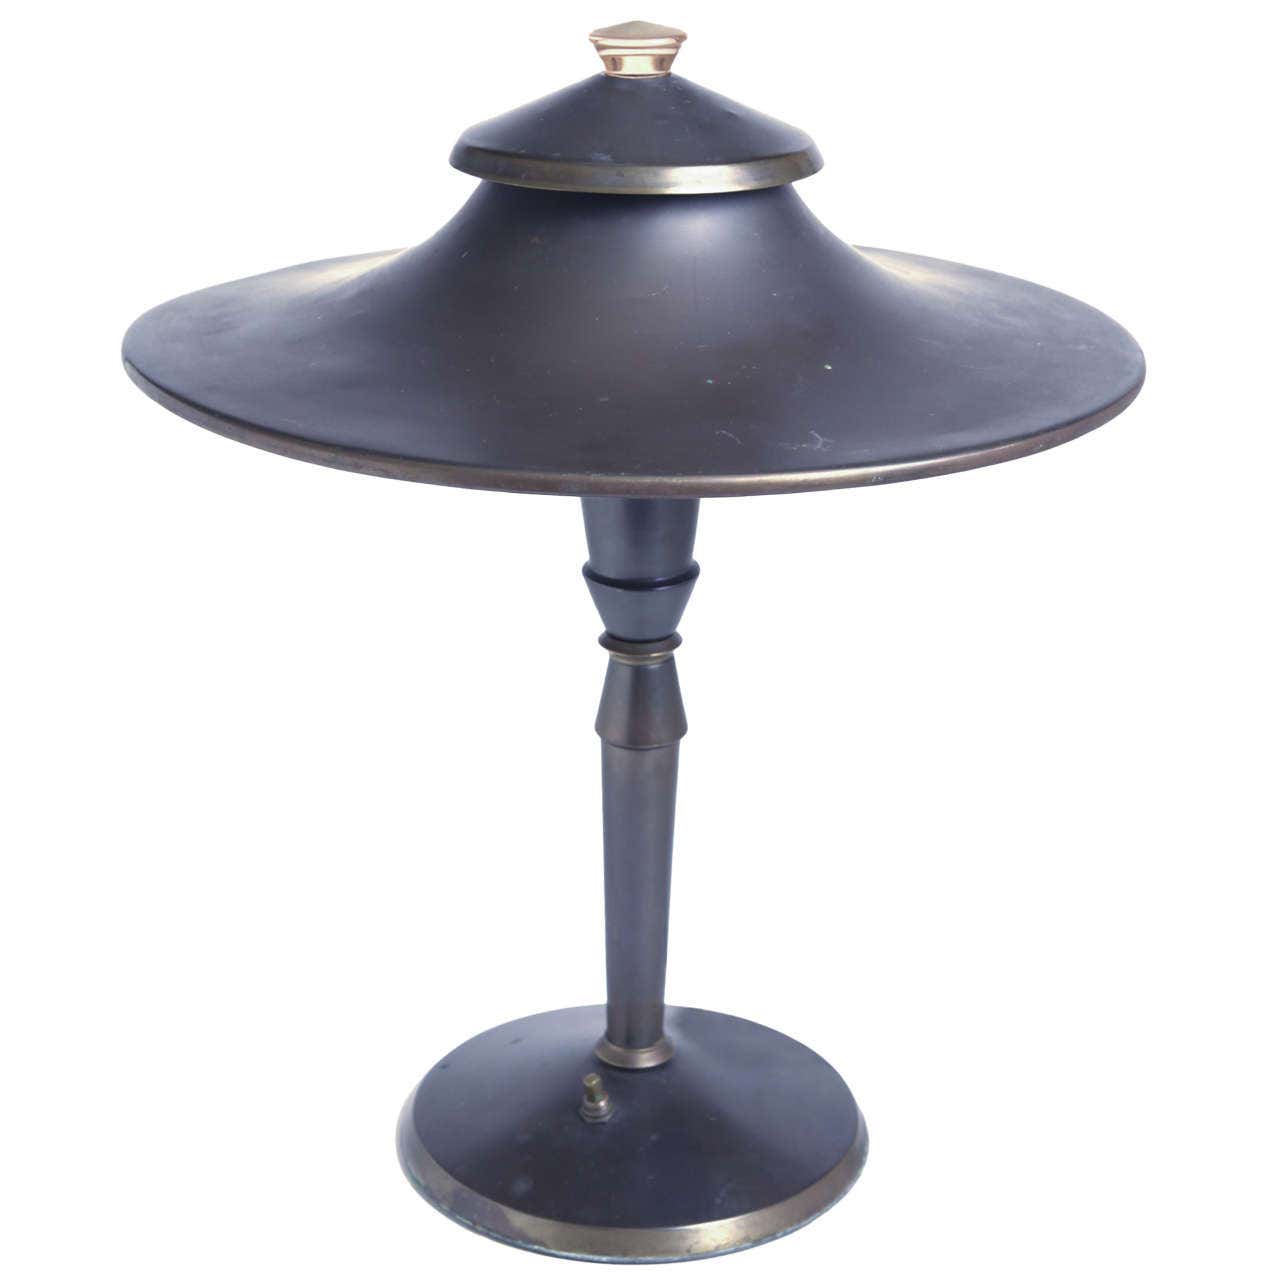 Original Early Leroy Doane Art Deco or Machine Age Pagoda Table Lamp ...